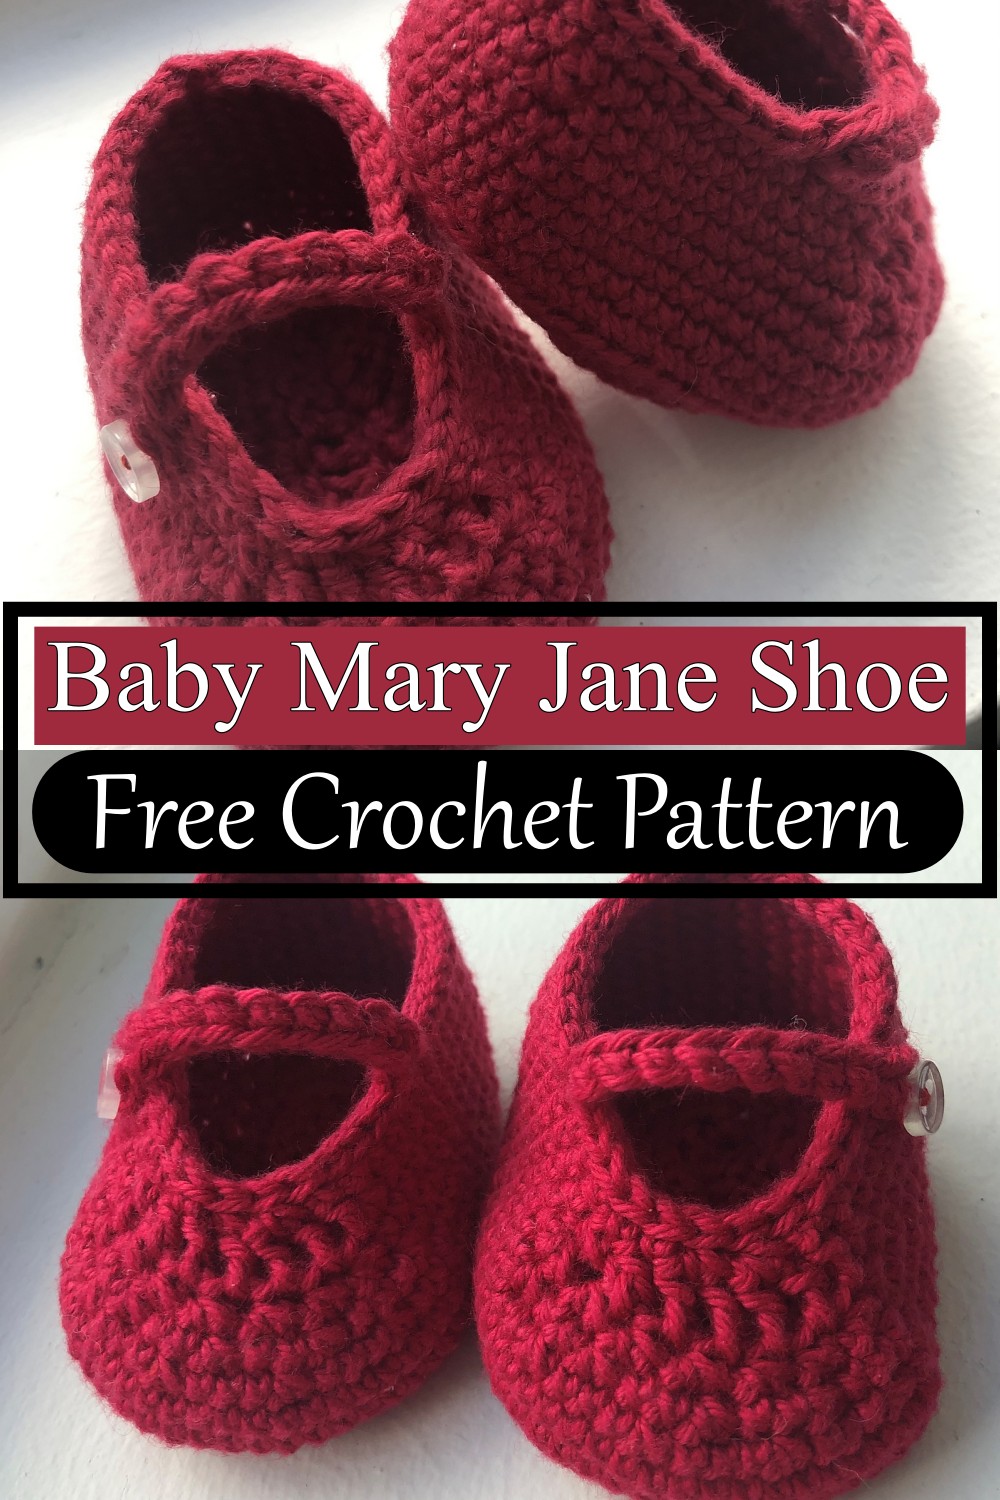 Baby Mary Jane Shoe